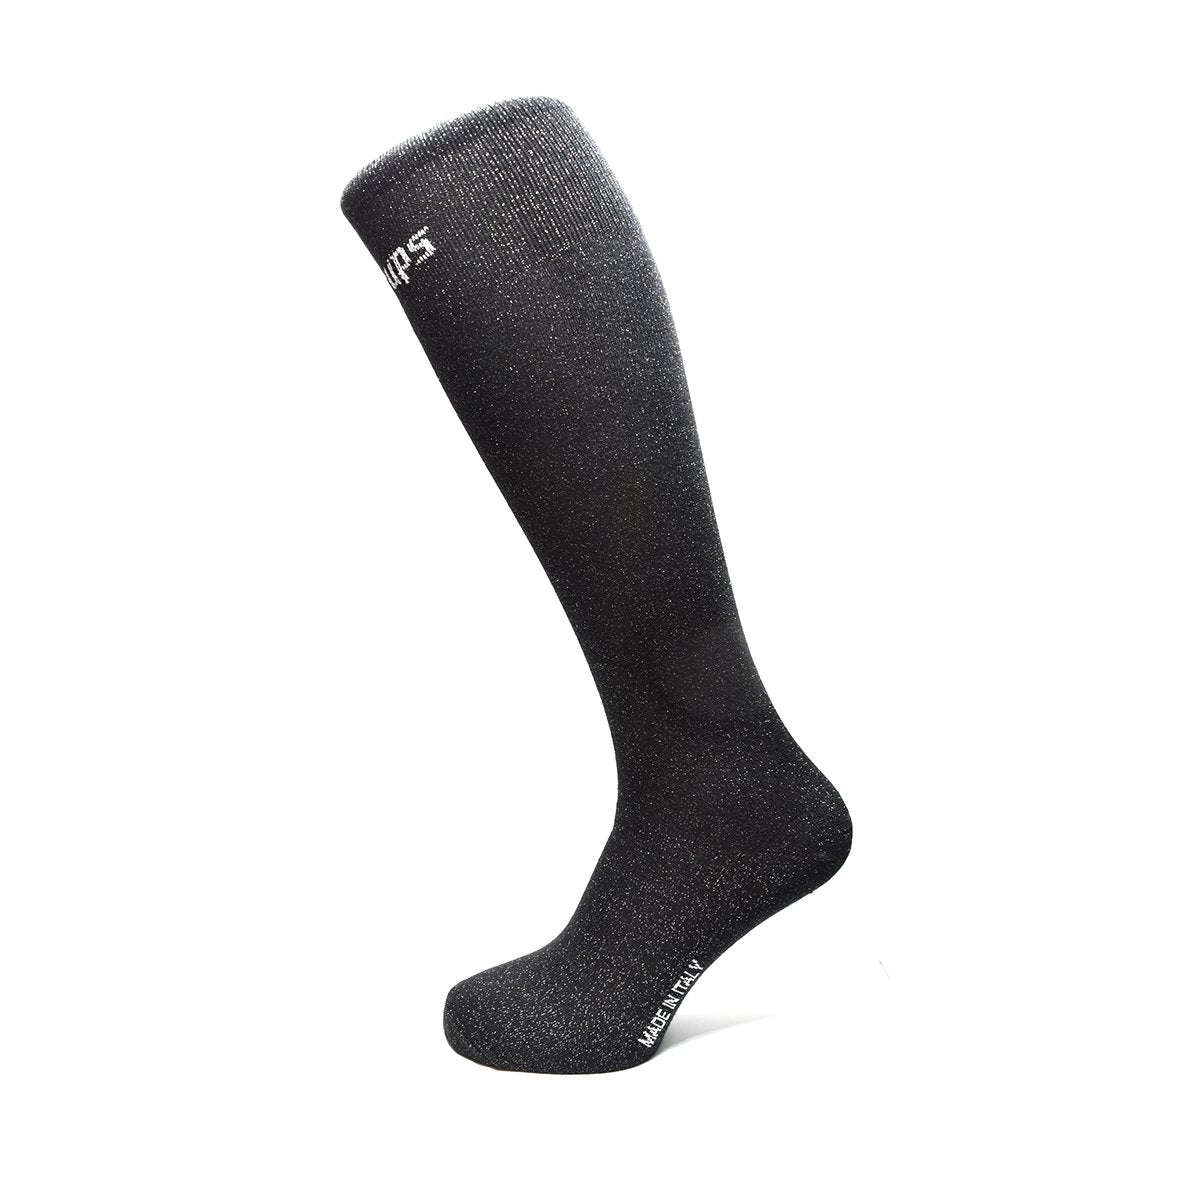 Tech Stirrups - Fashion Socks